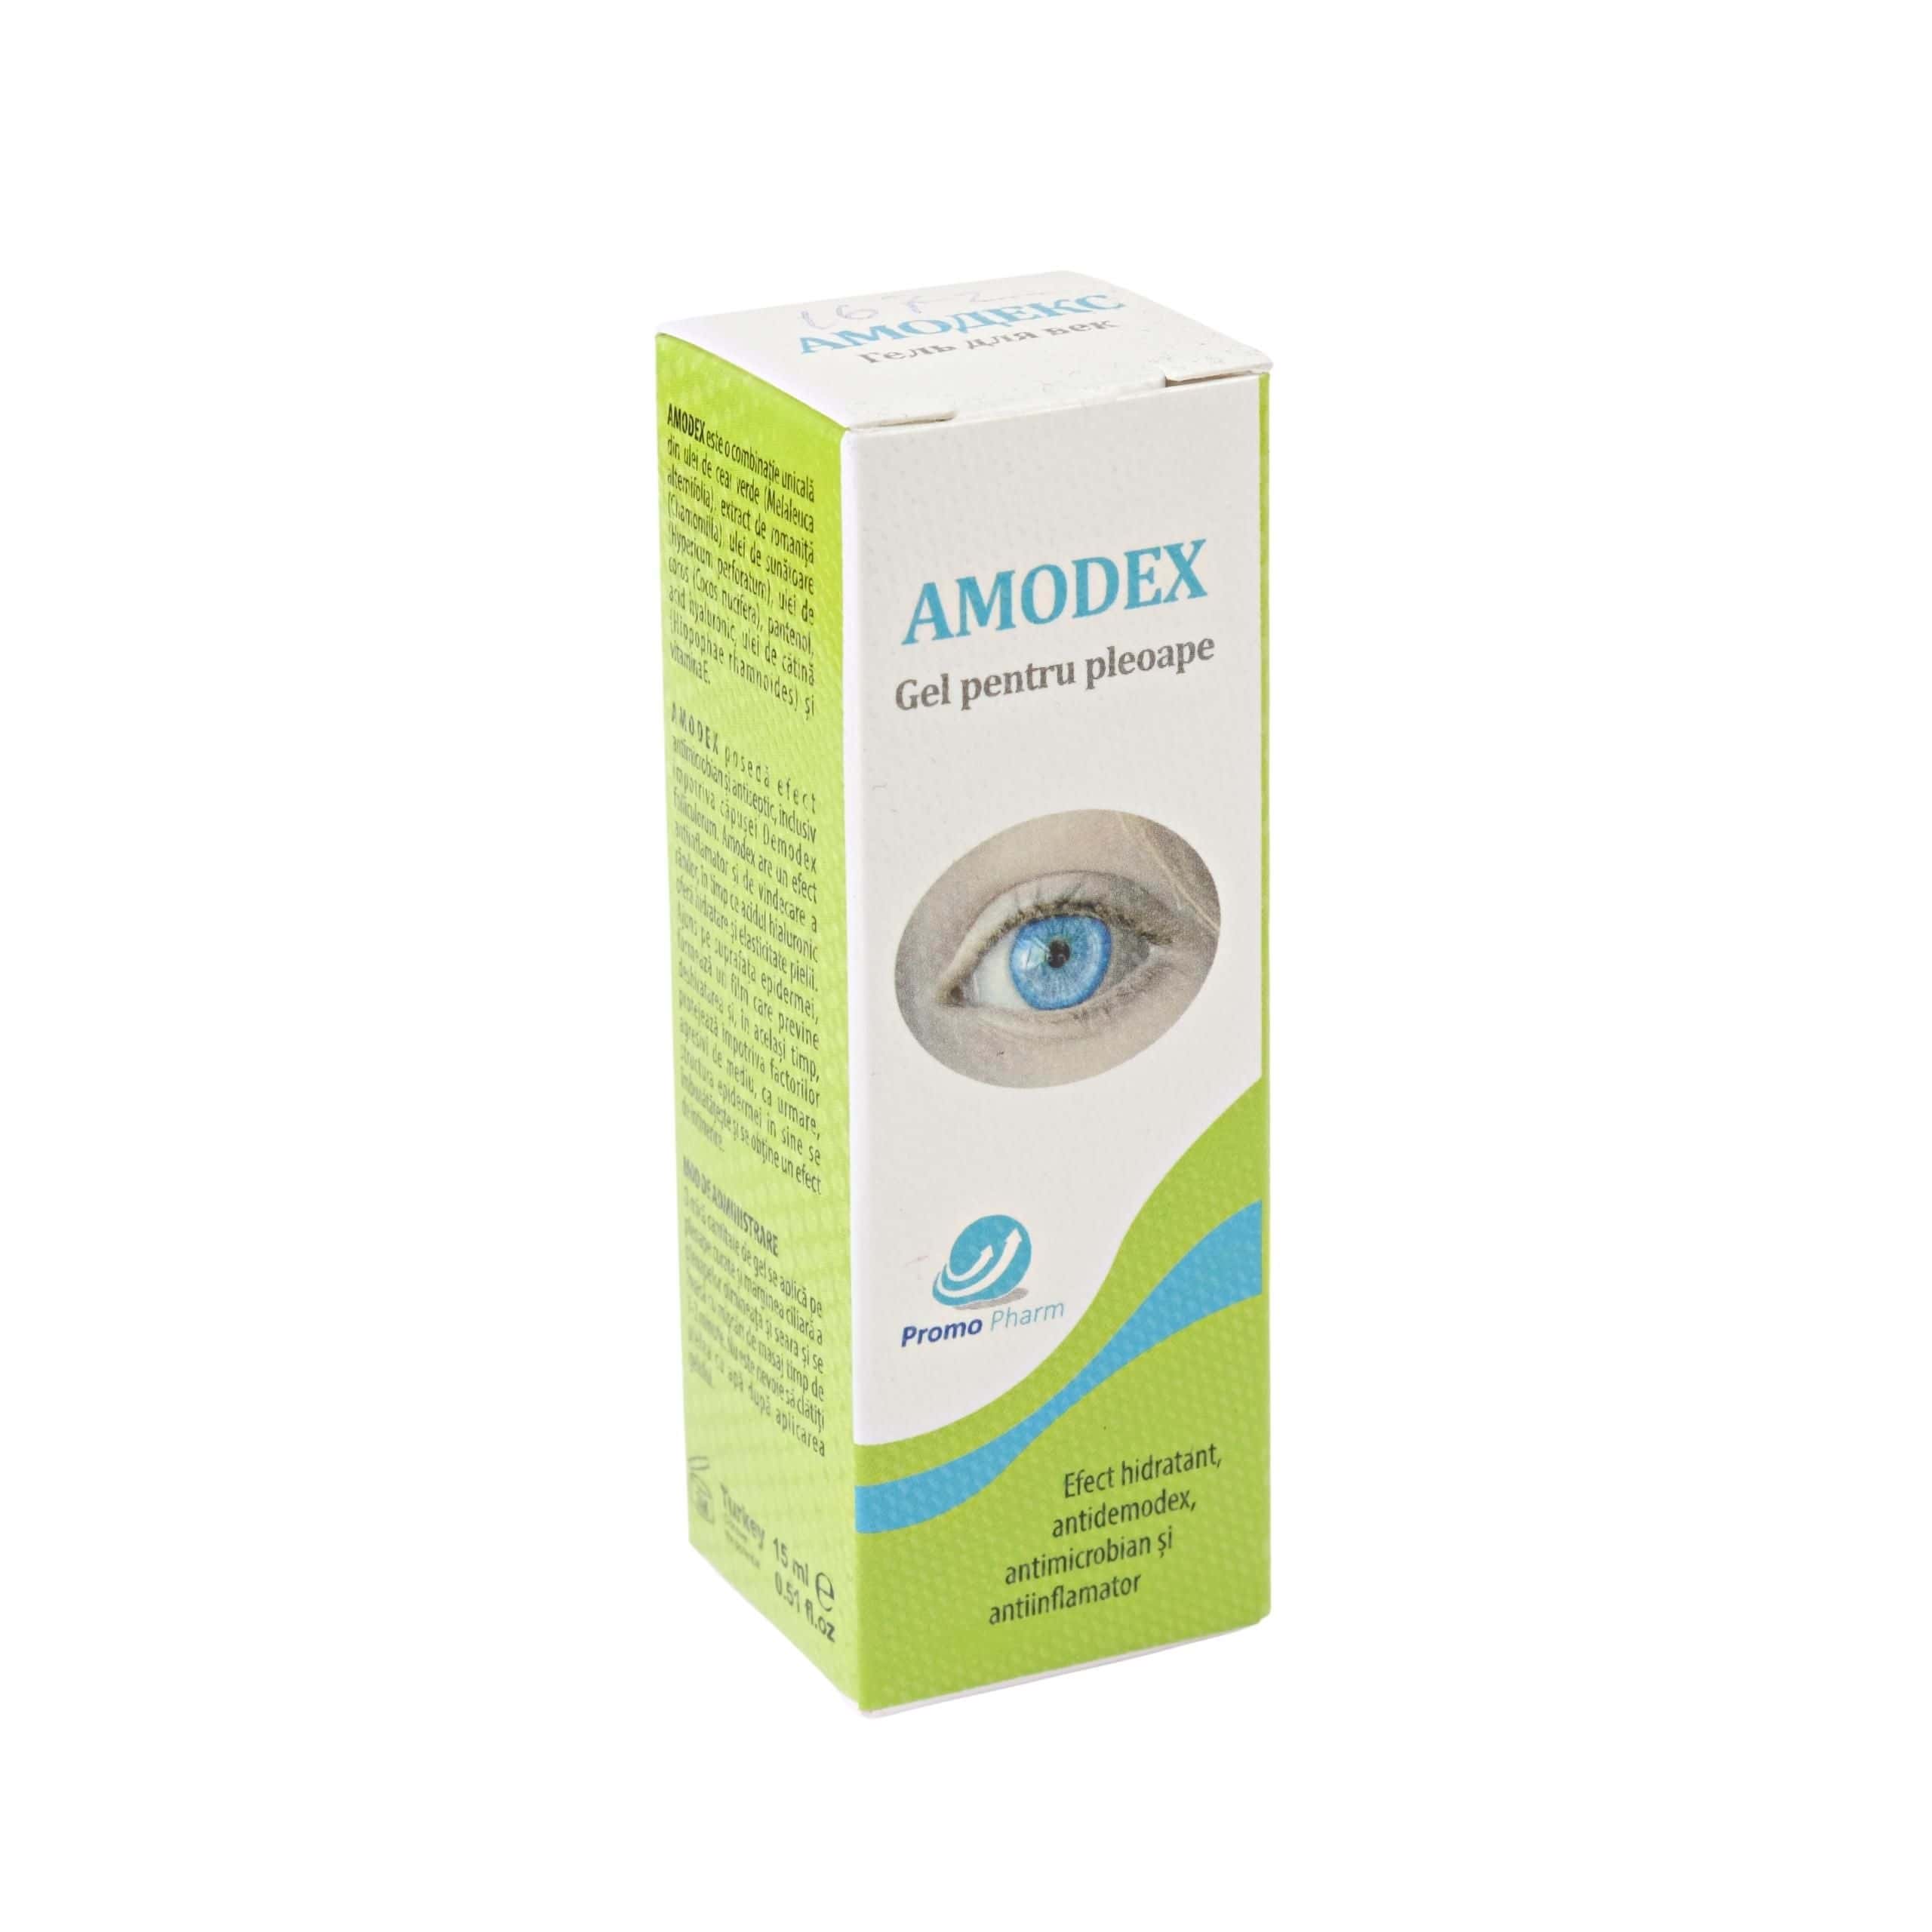 Amodex gel pentru pleoape (hidratant, antidemodex) 15ml N1